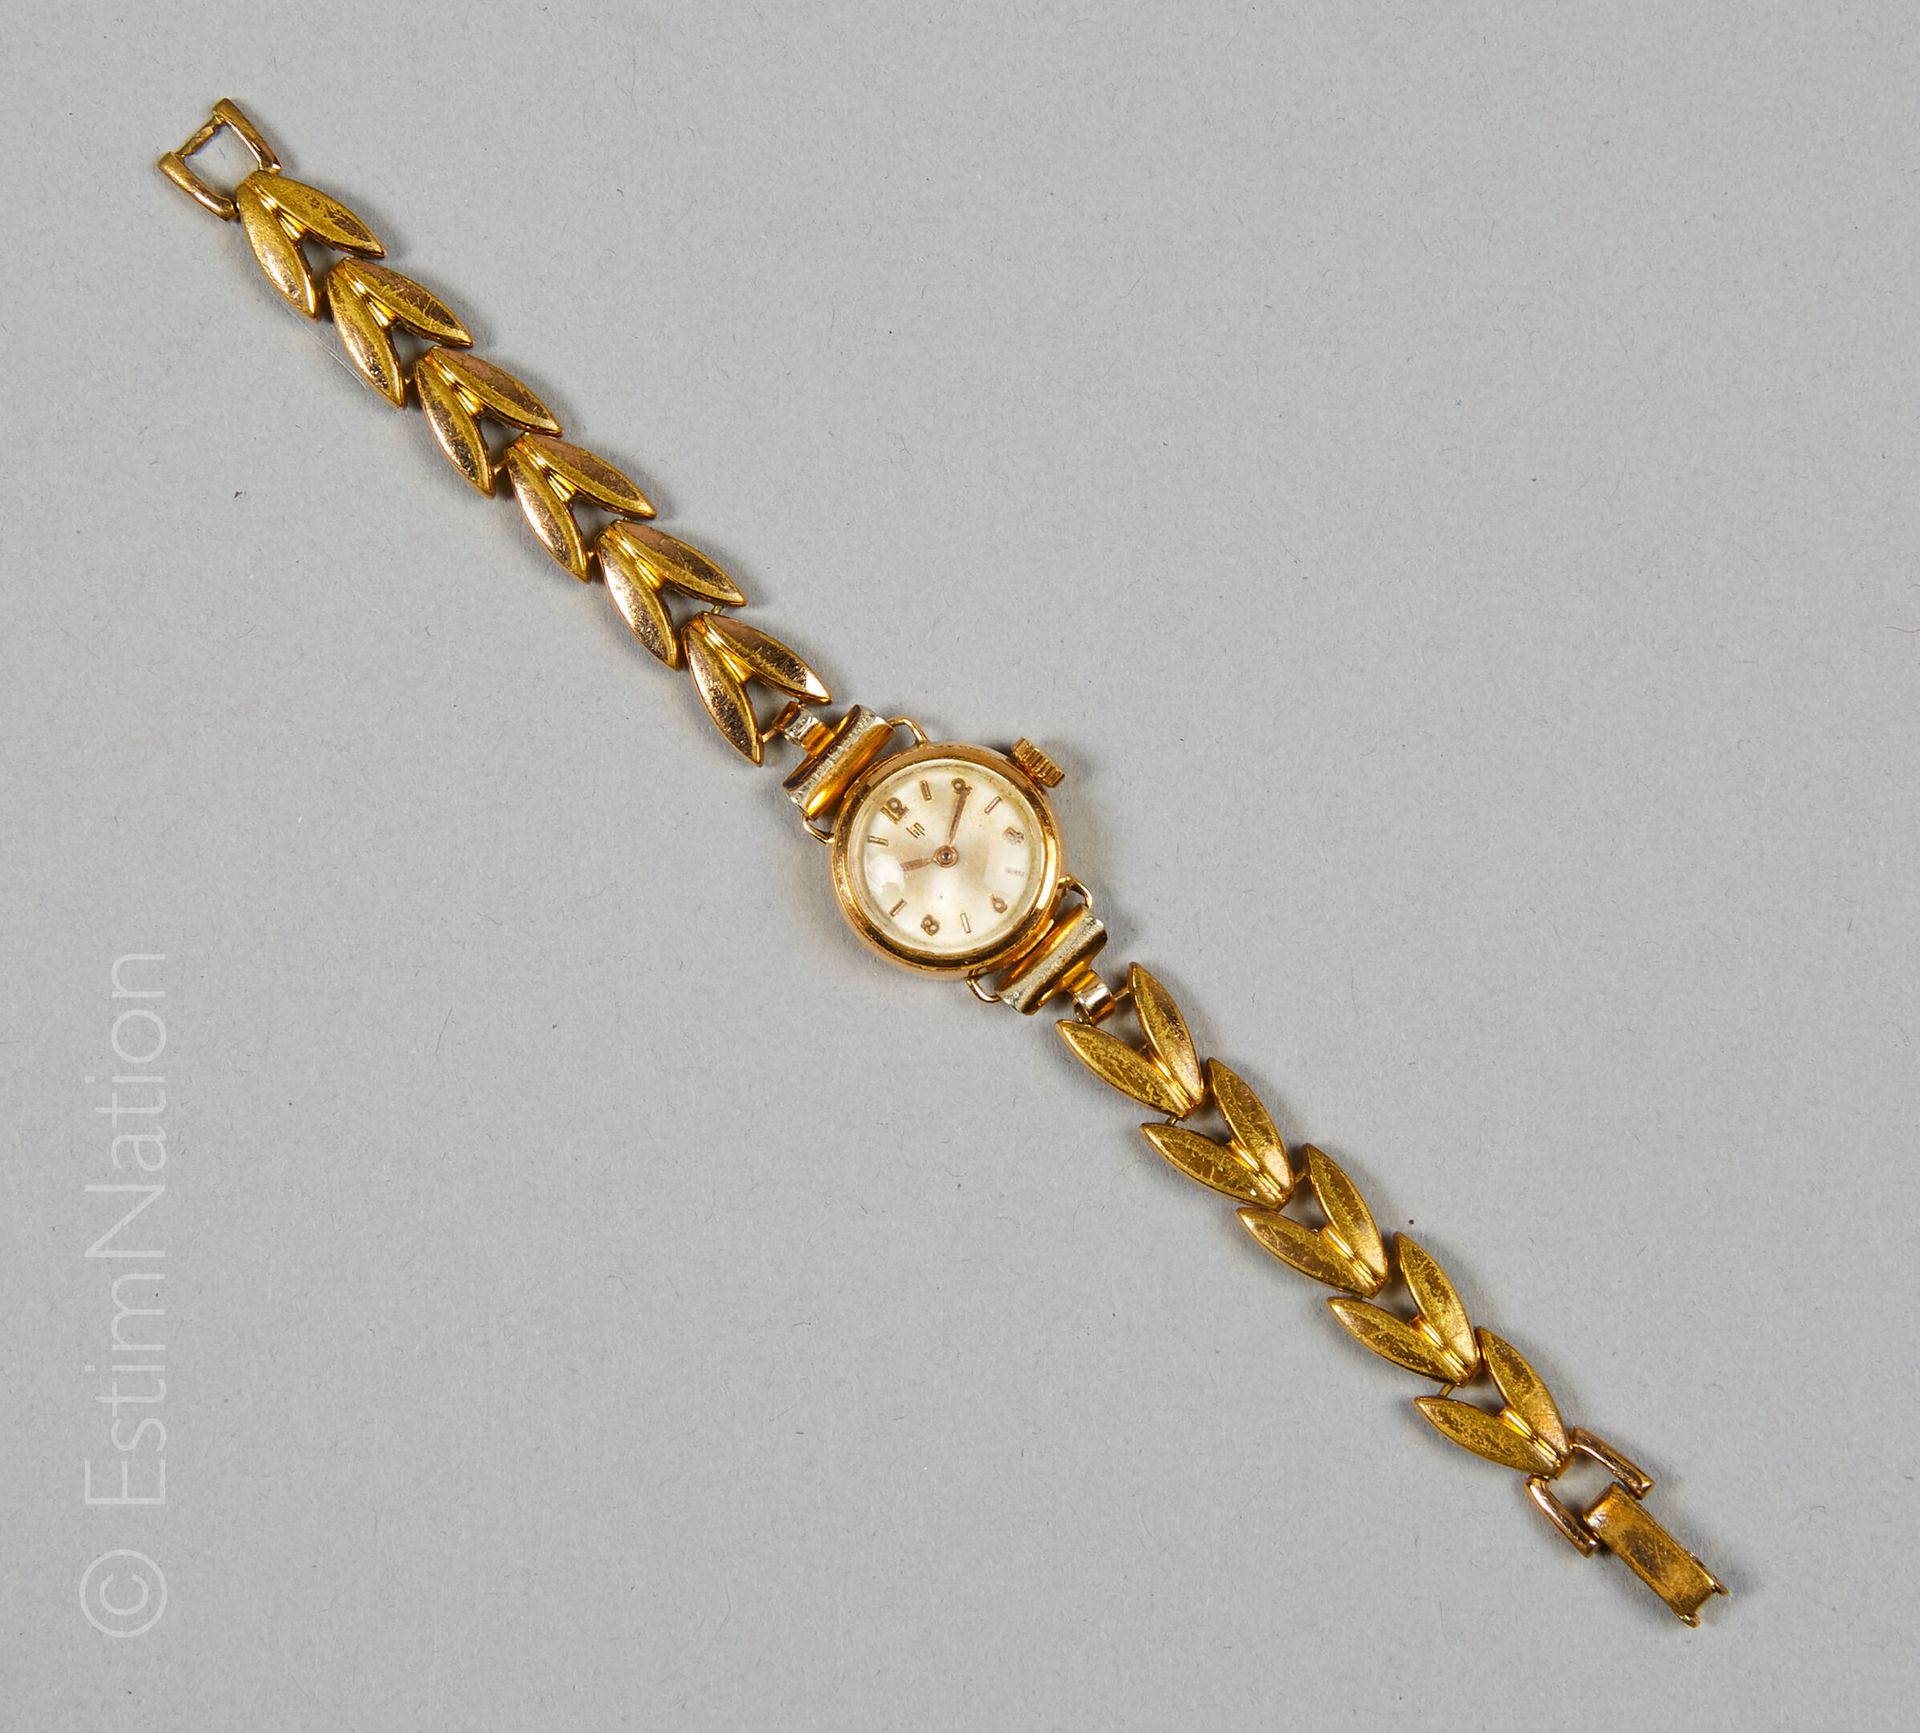 LIP Reloj de señora de oro amarillo de 18 quilates (750/°) con caja redonda, fon&hellip;